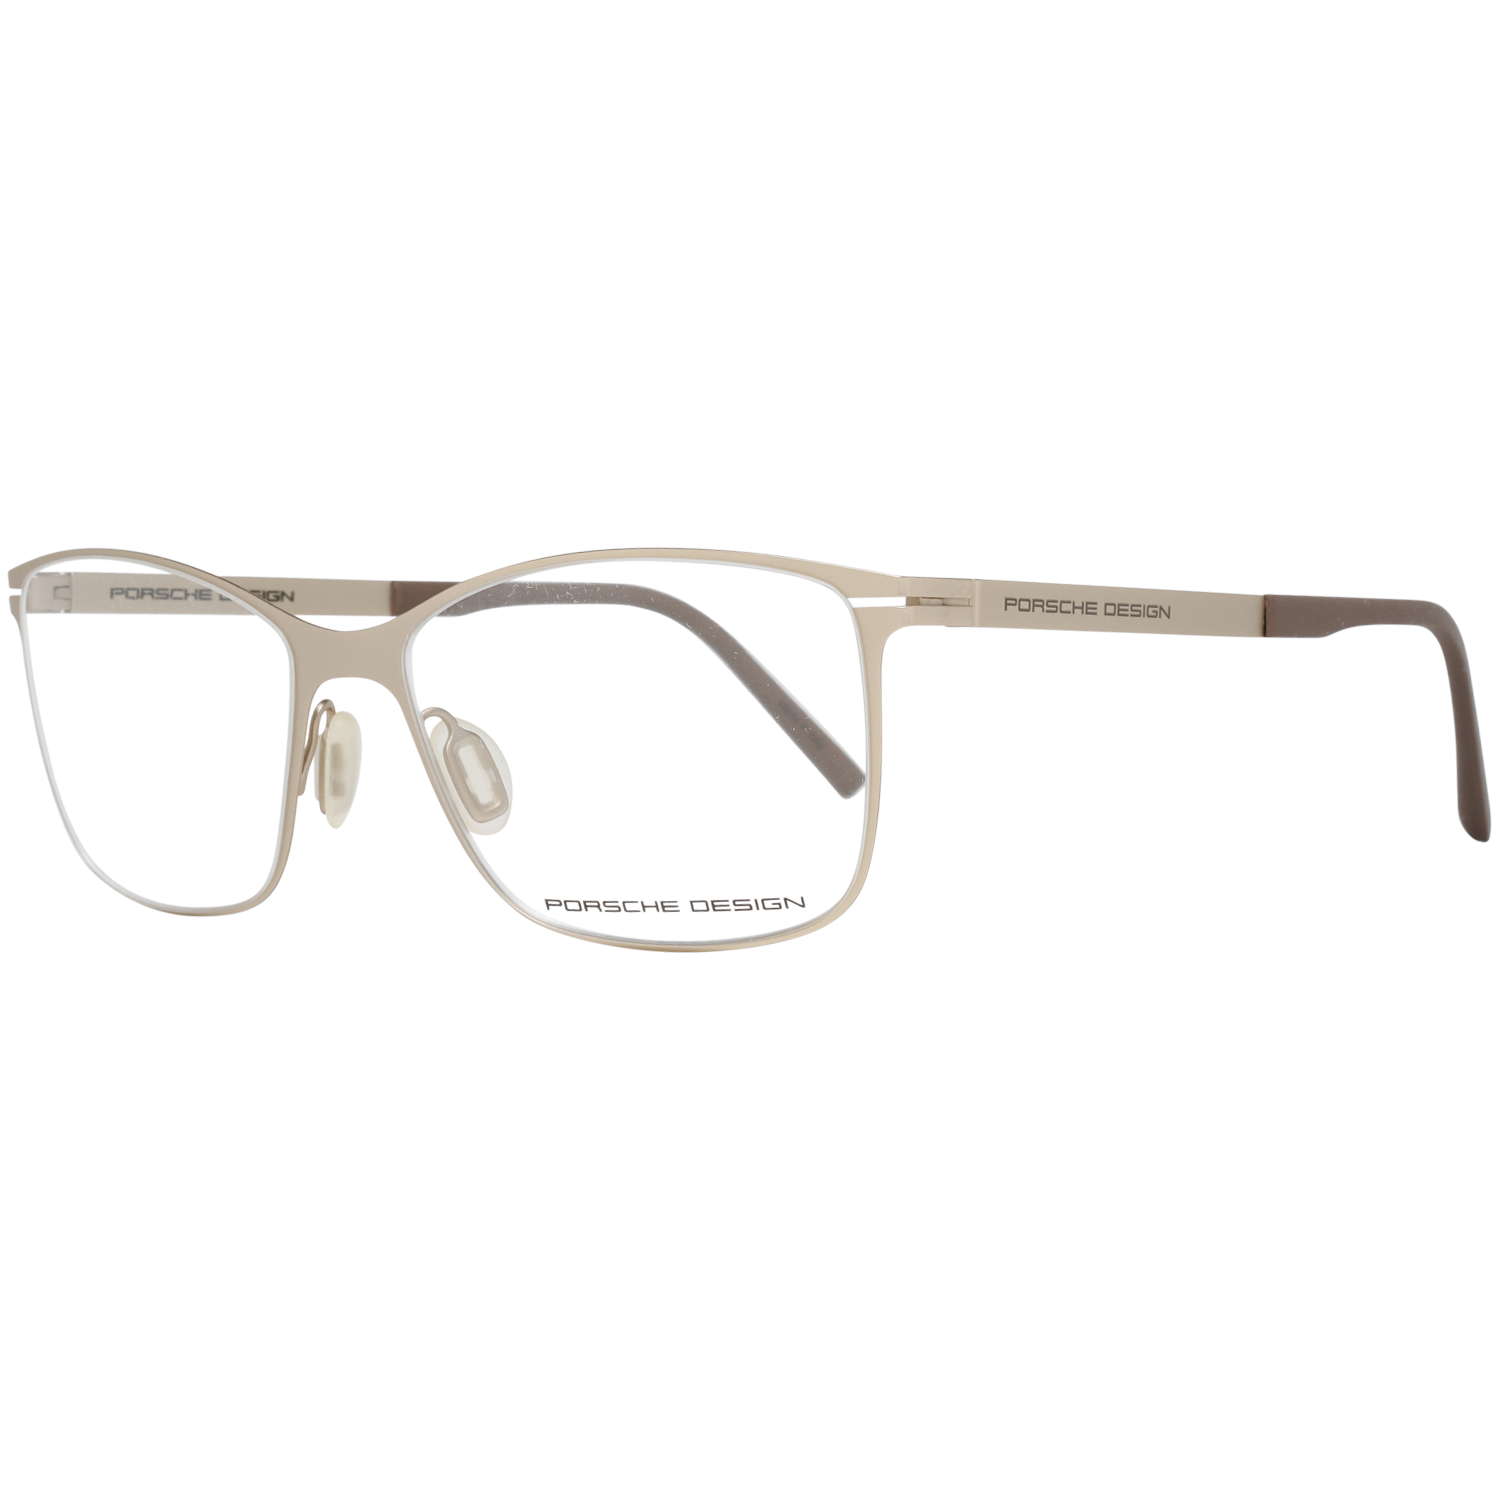 Porsche Design Eyeglasses Porsche Design Glasses Frames P8262 C 54 Eyeglasses Eyewear UK USA Australia 